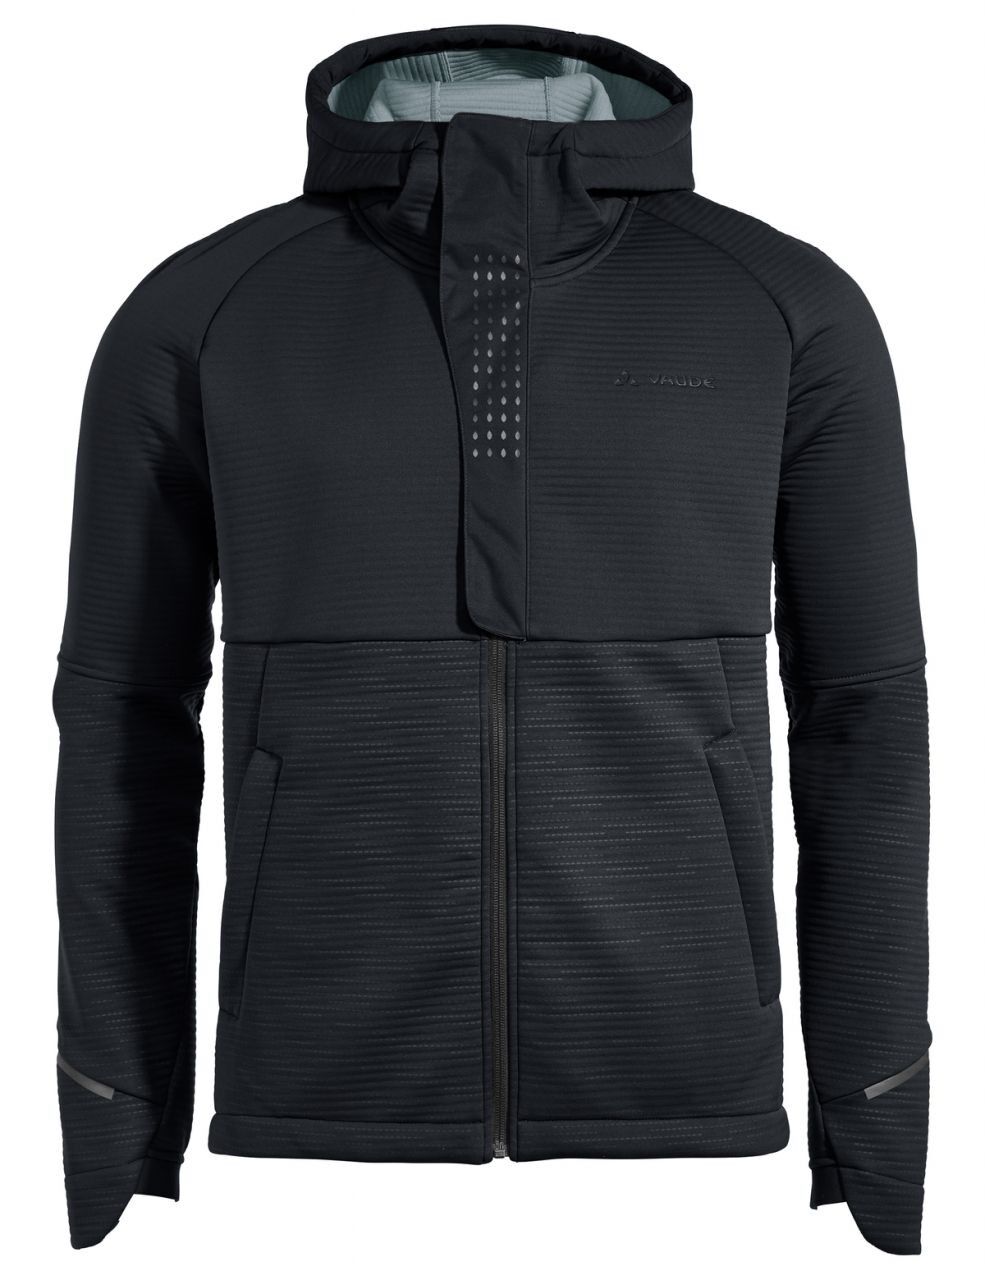 Vaude Cyclist Winter Softshell Jacket - Softshell jacket - Men's